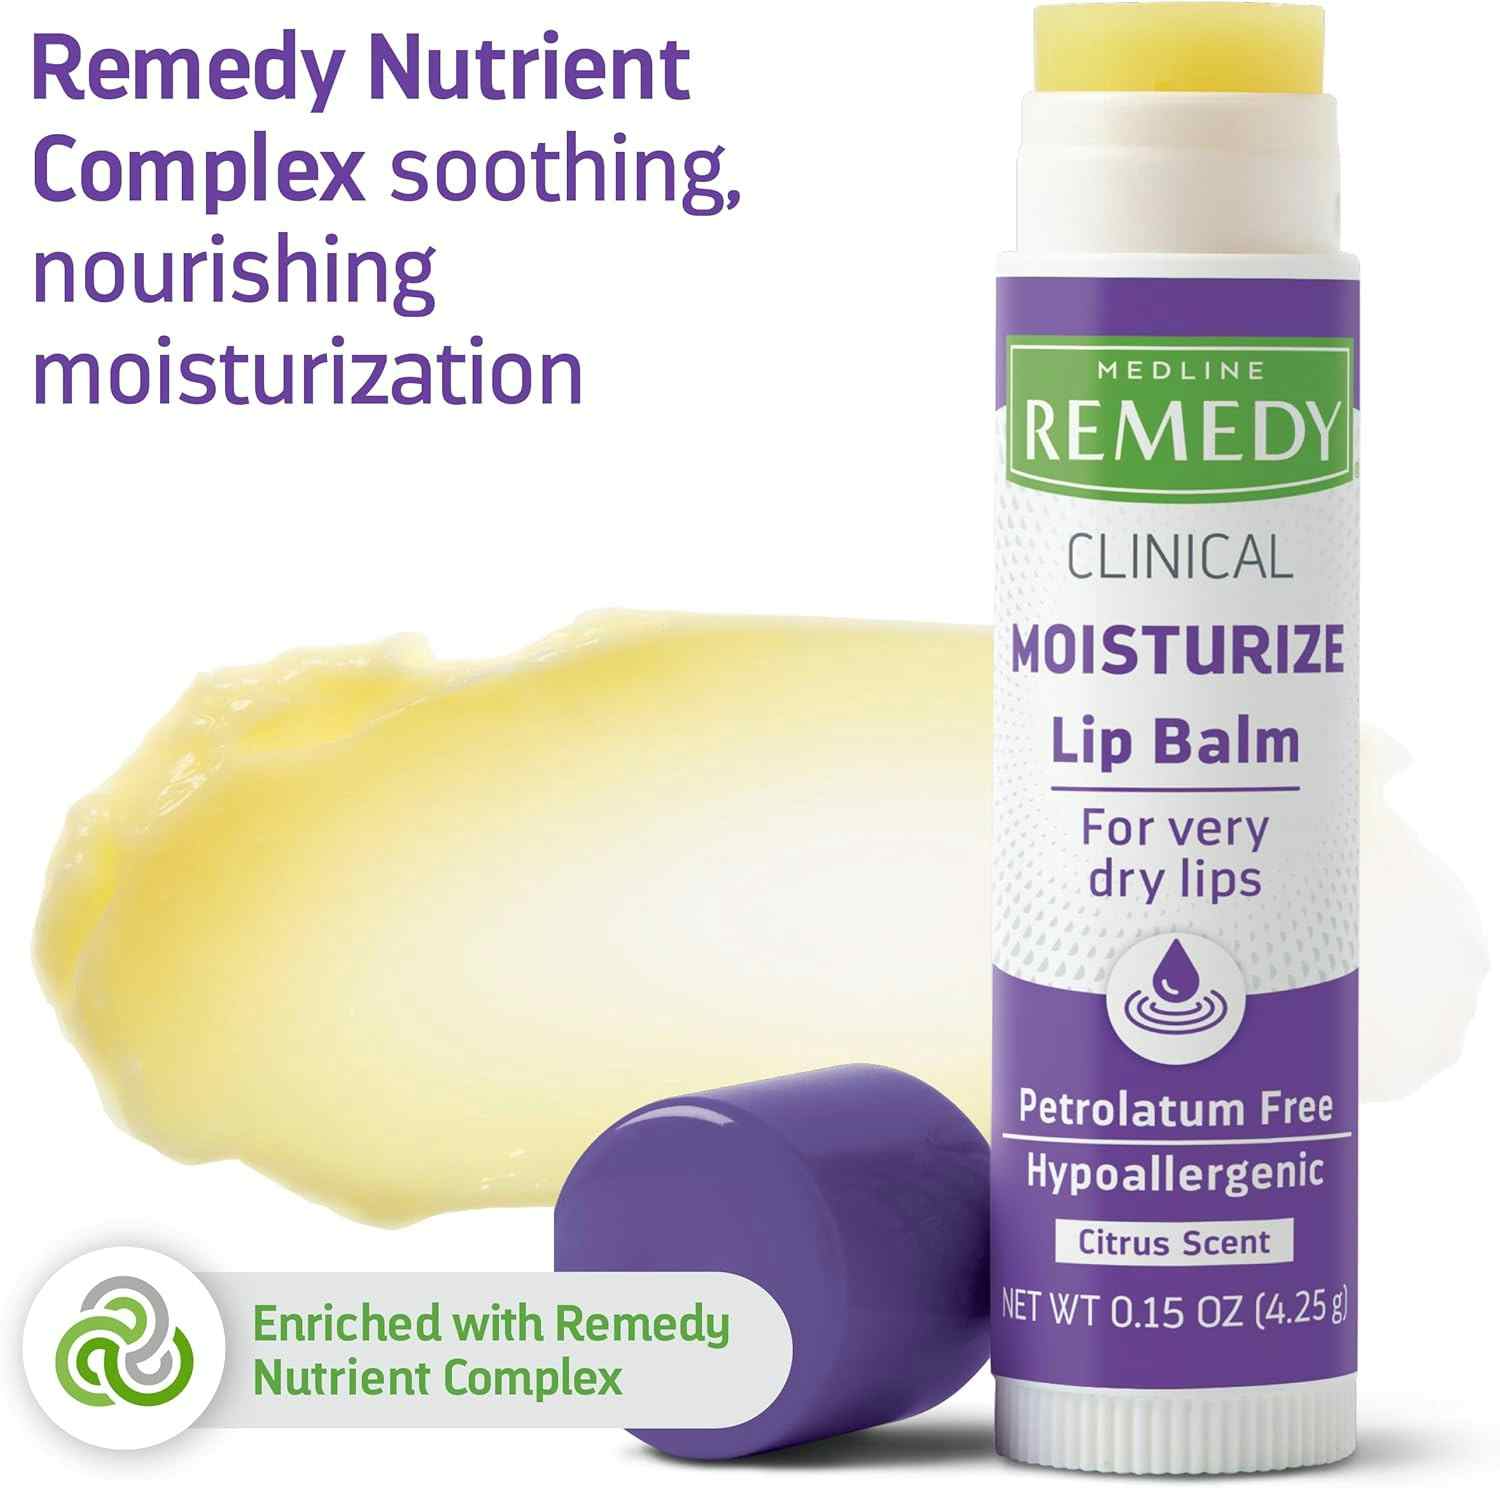 Medline Remedy Lip Balm, 0.15 oz.